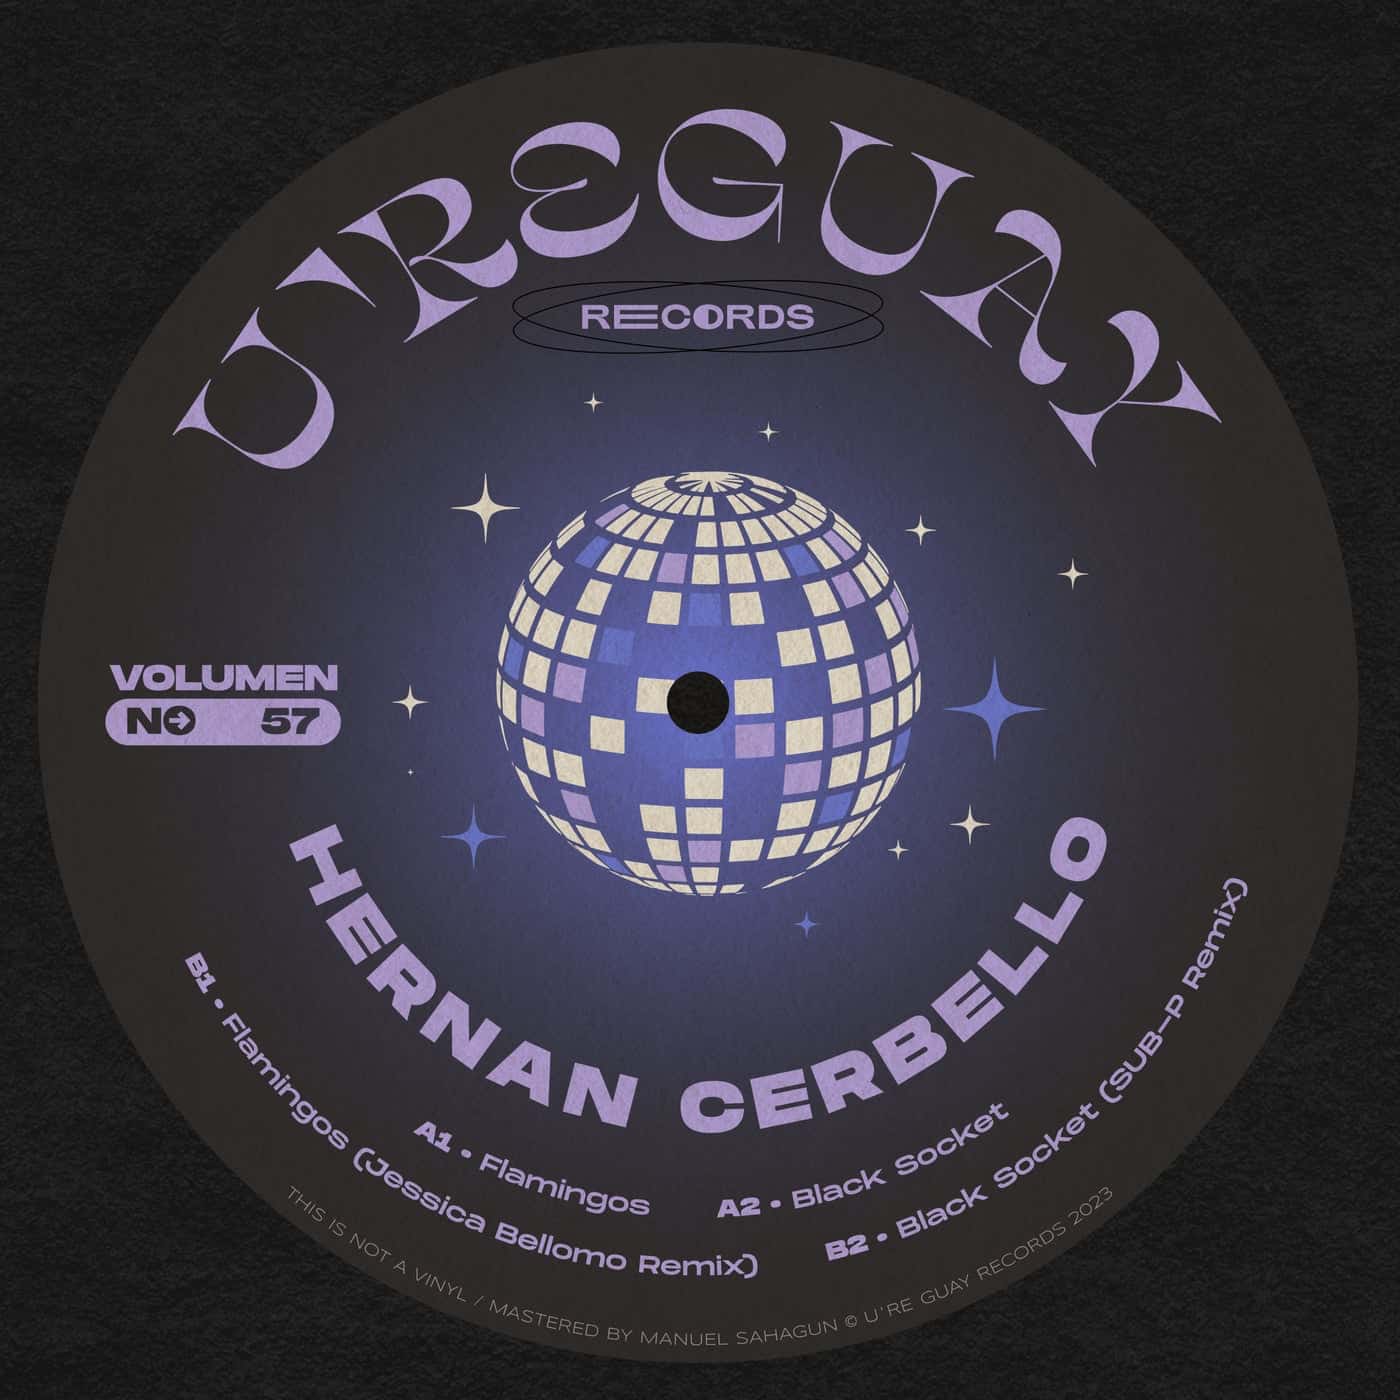 Download Hernan Cerbello - U're Guay, Vol. 57 on Electrobuzz